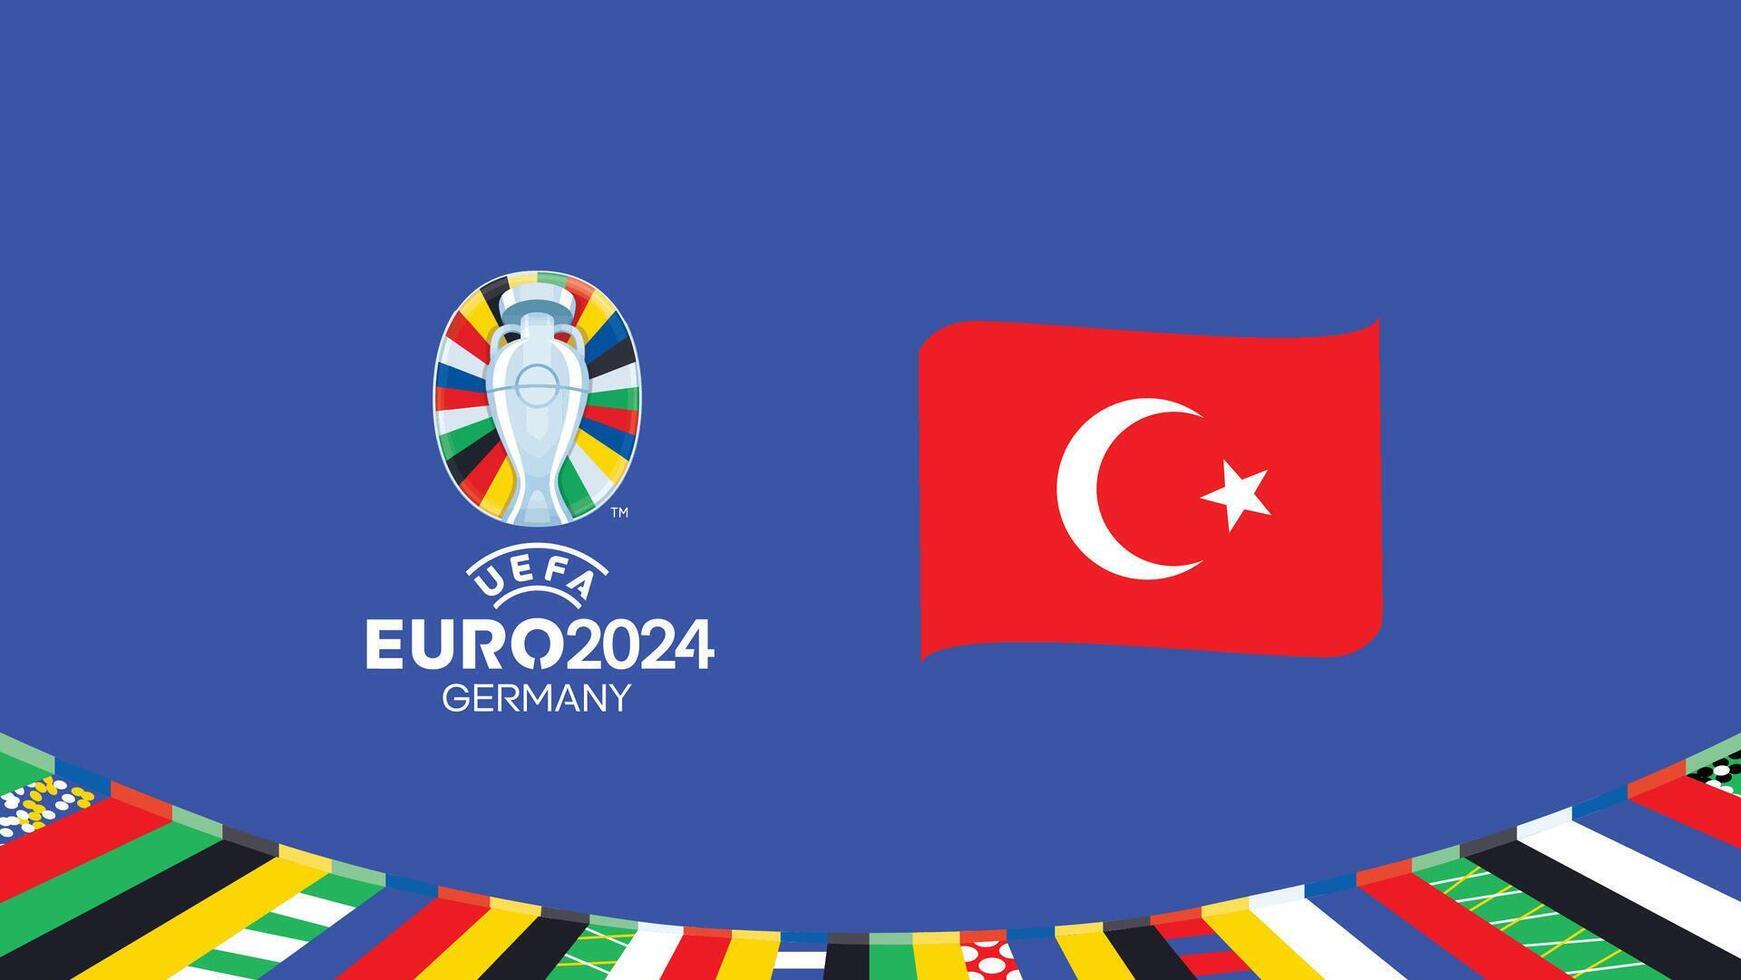 Euro 2024 Turkiye Emblem Ribbon Teams Design With Official Symbol Logo Abstract Countries European Football Illustration vector